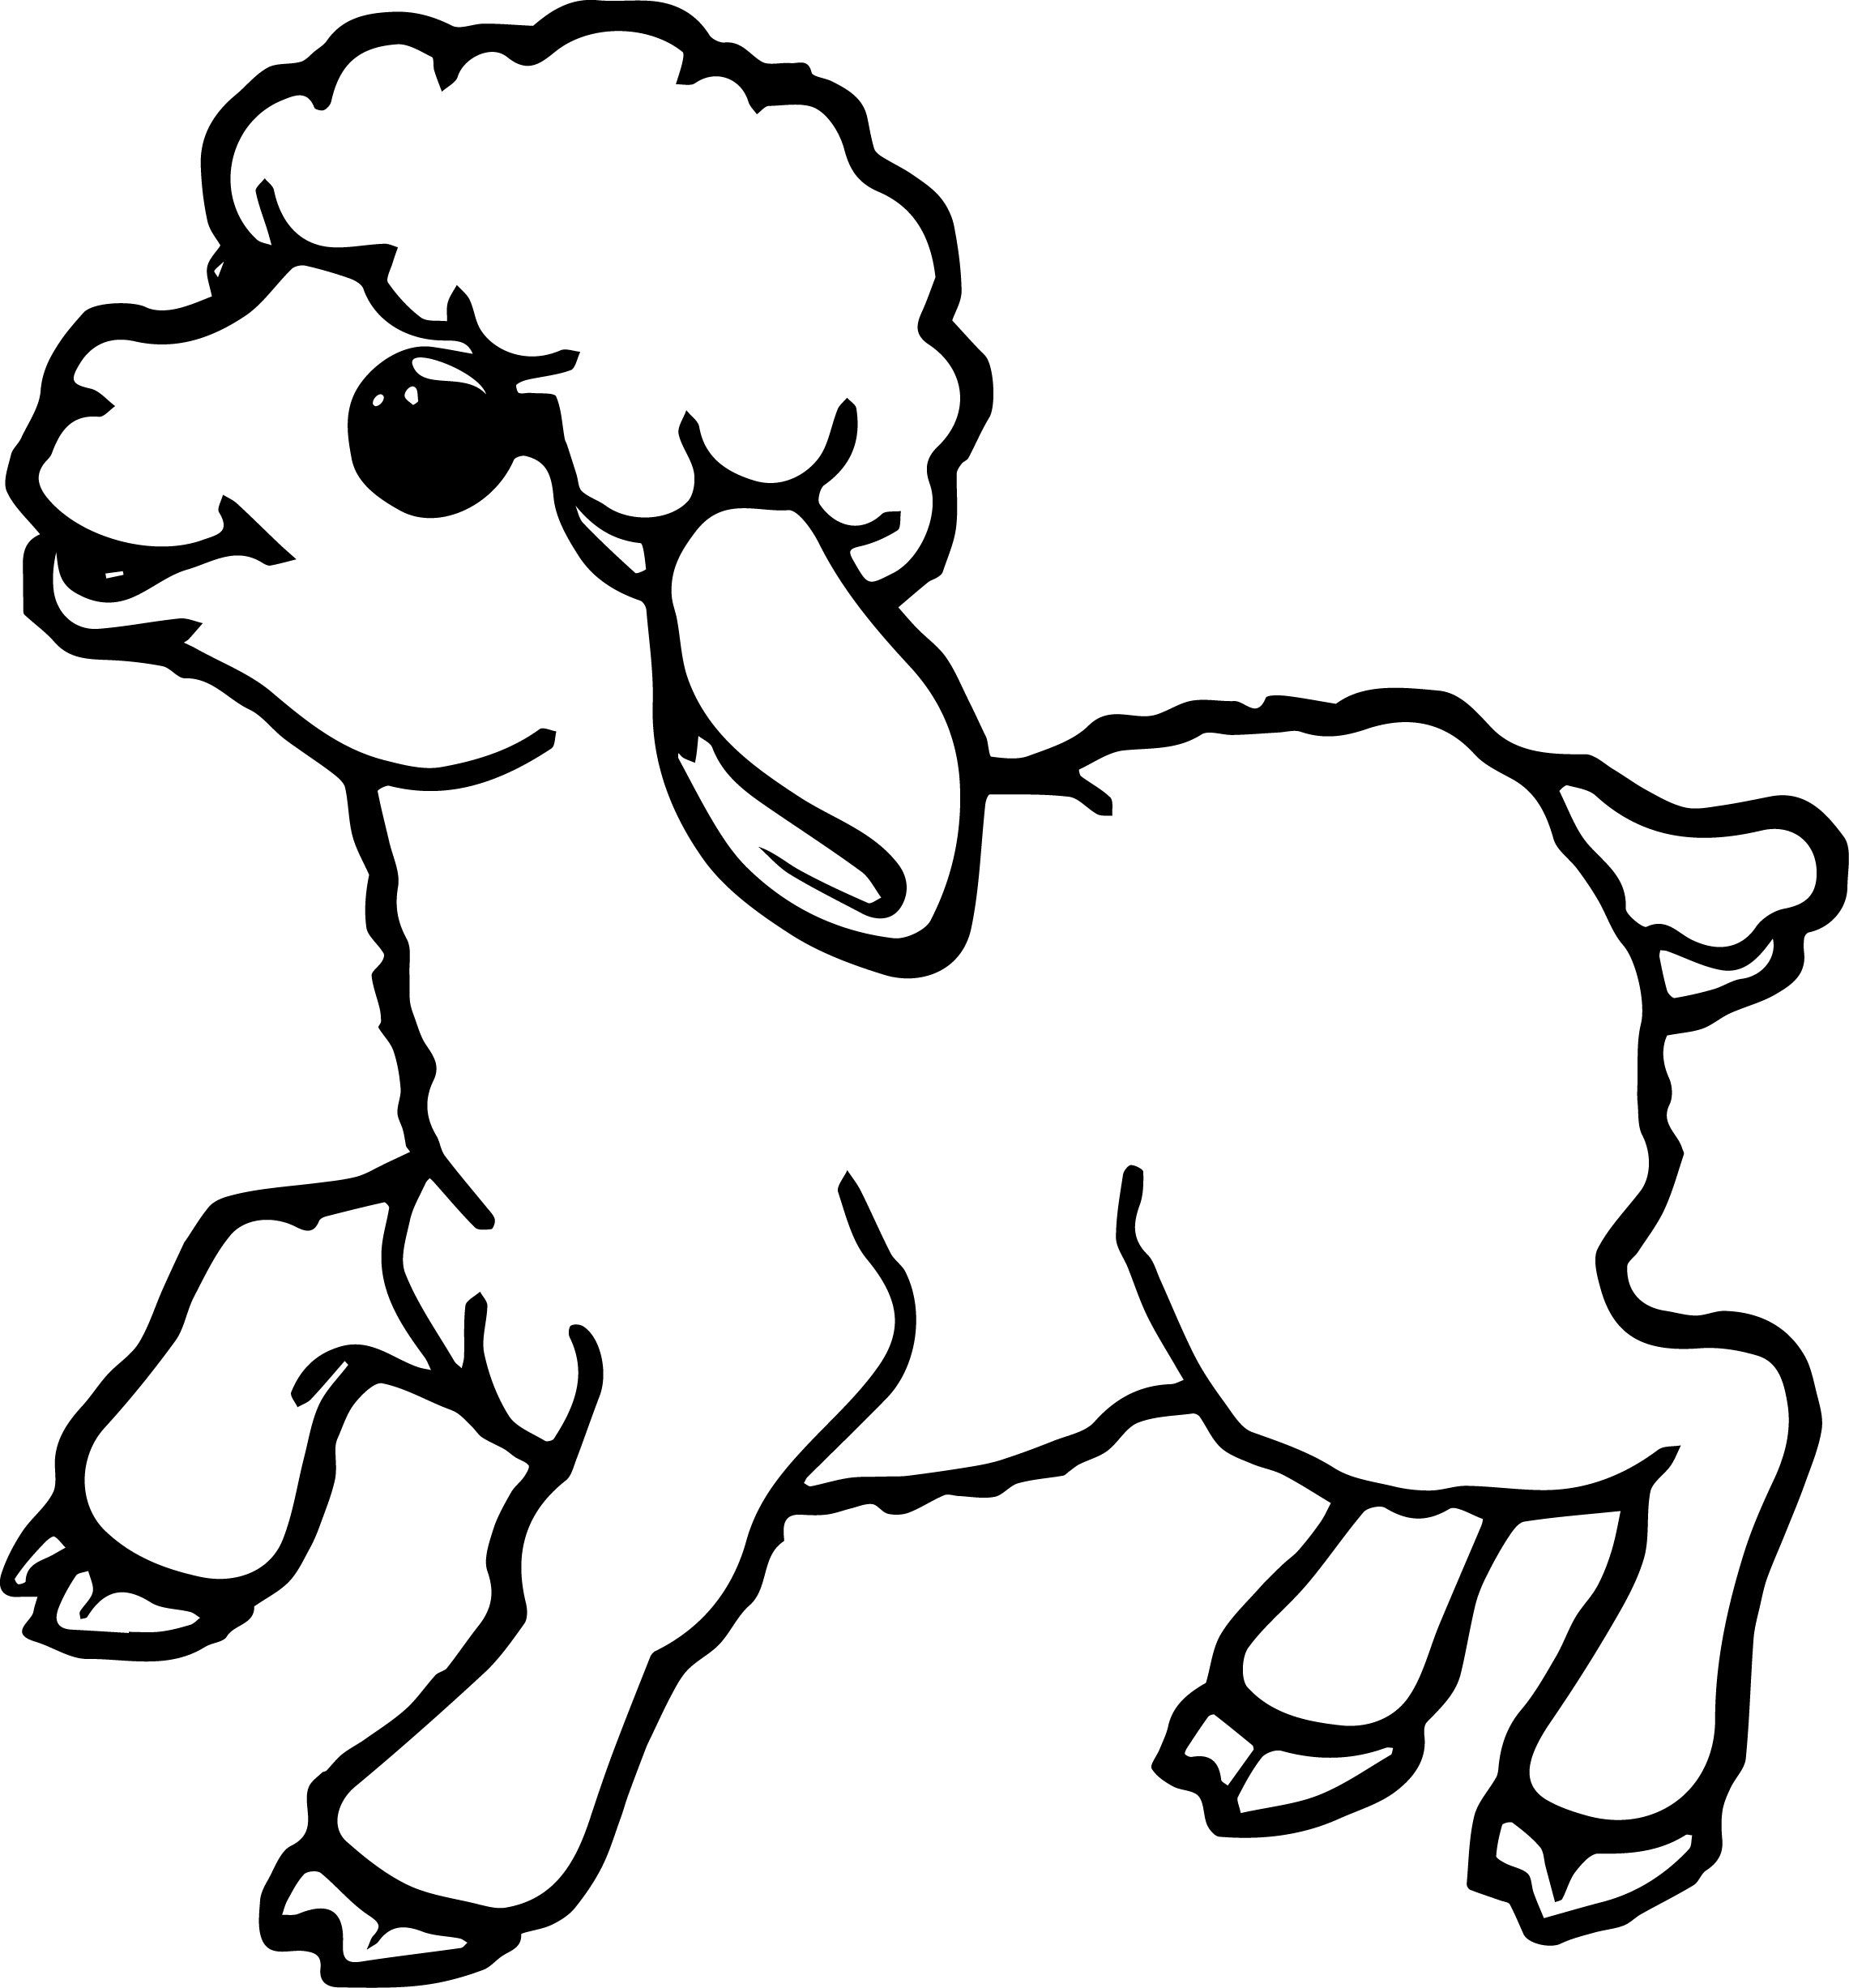 Sheep-Coloring-Page-10.jpg